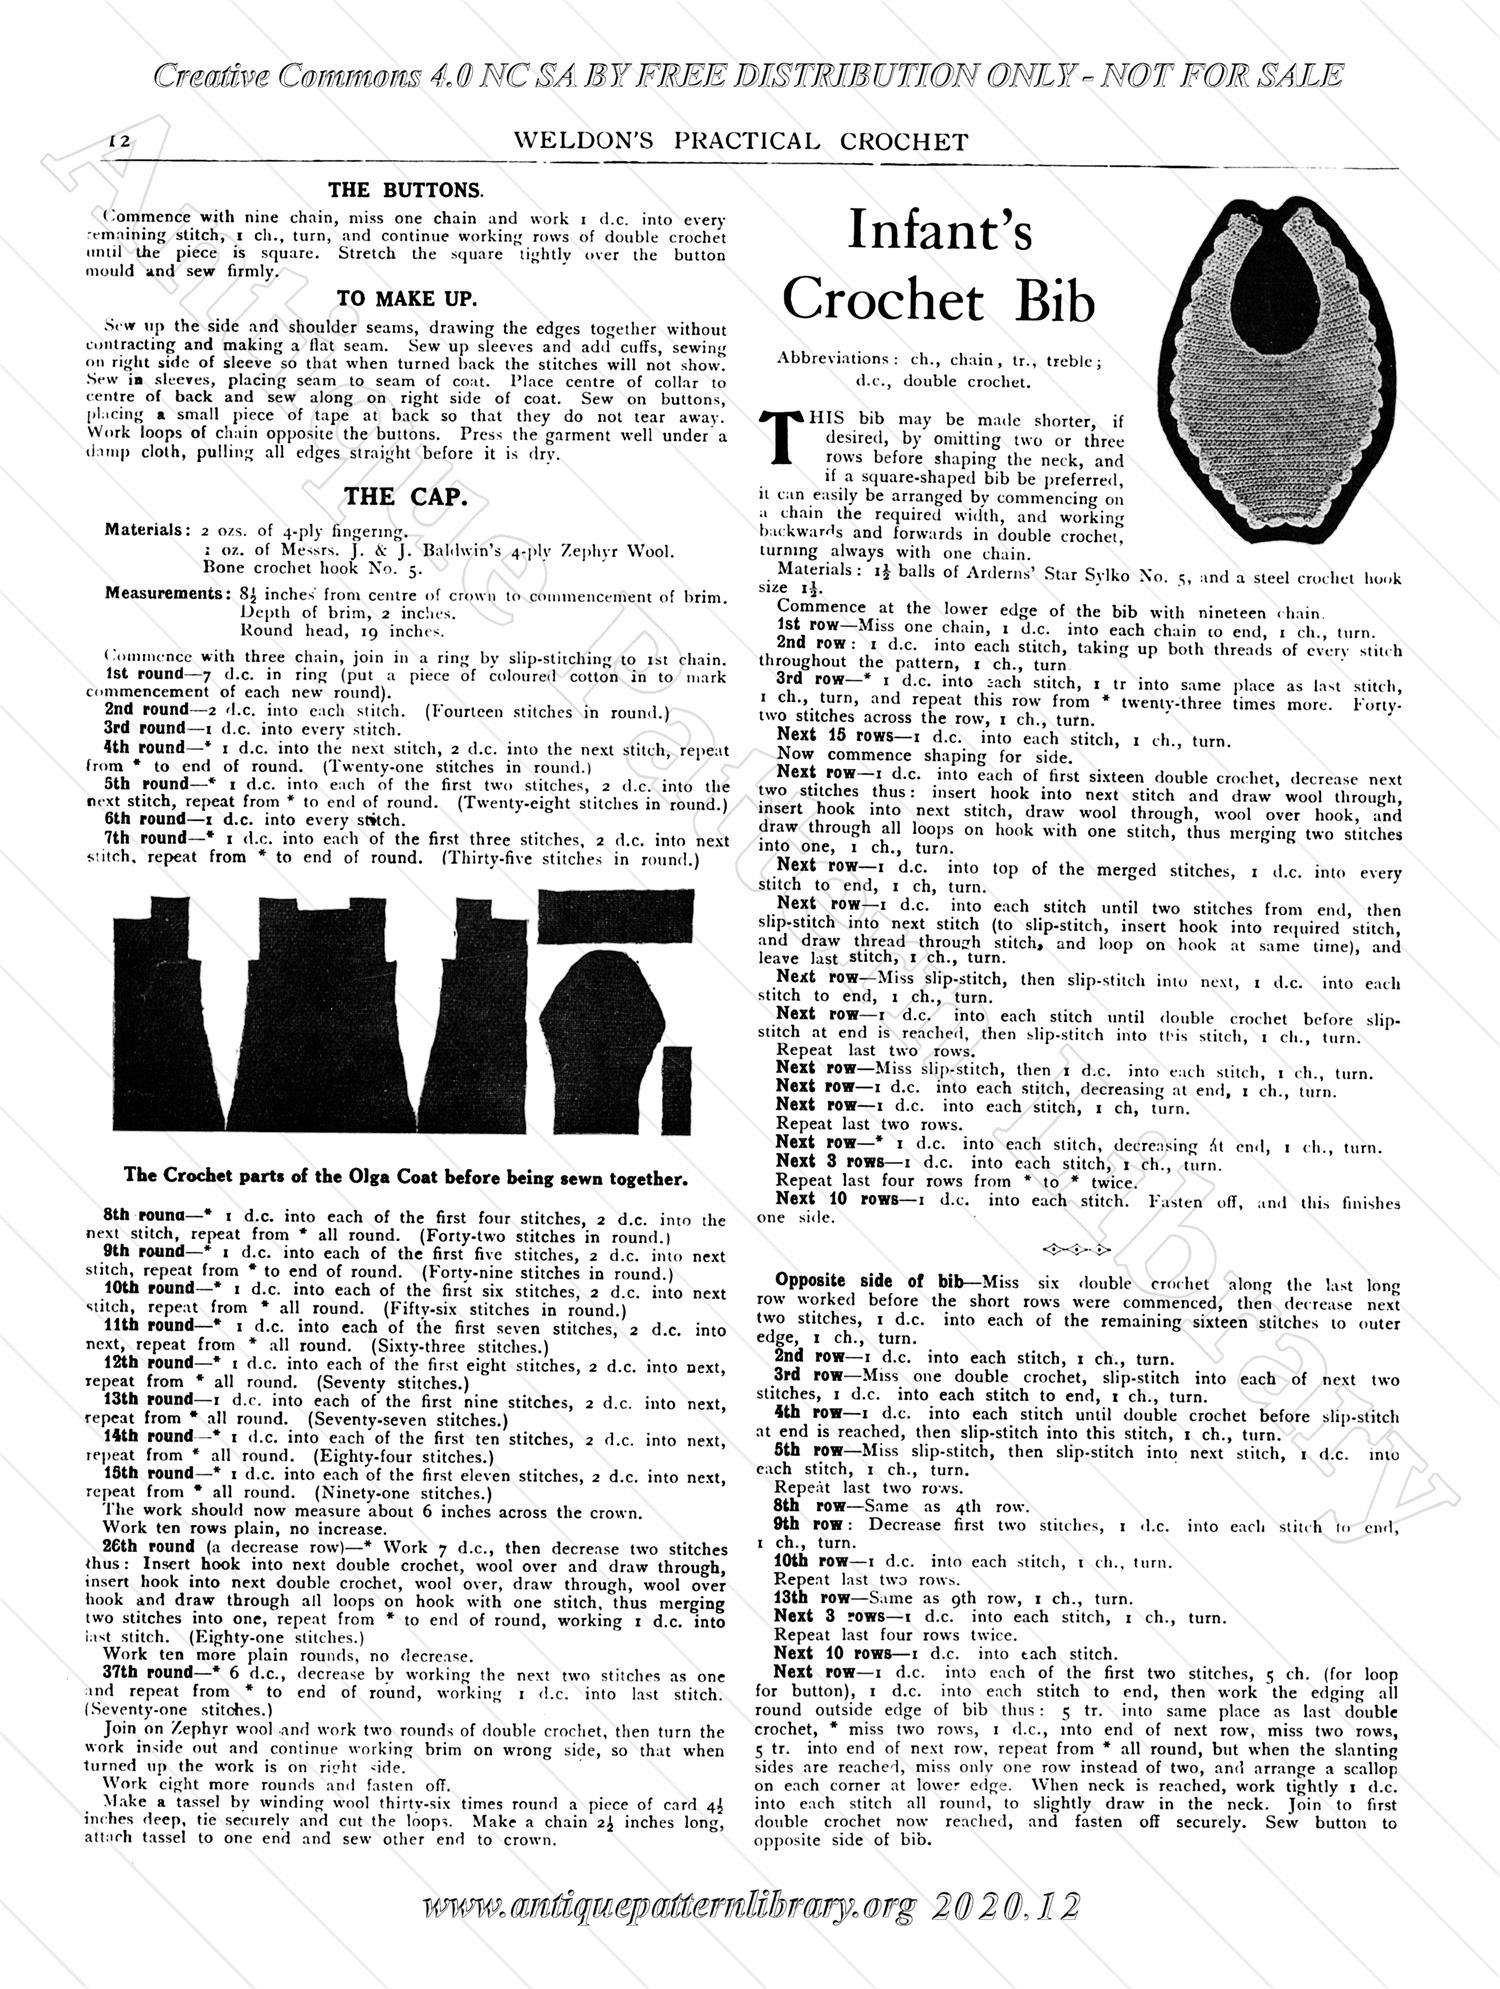 K-WK015 Weldon's Practical Crochet, 194th Series